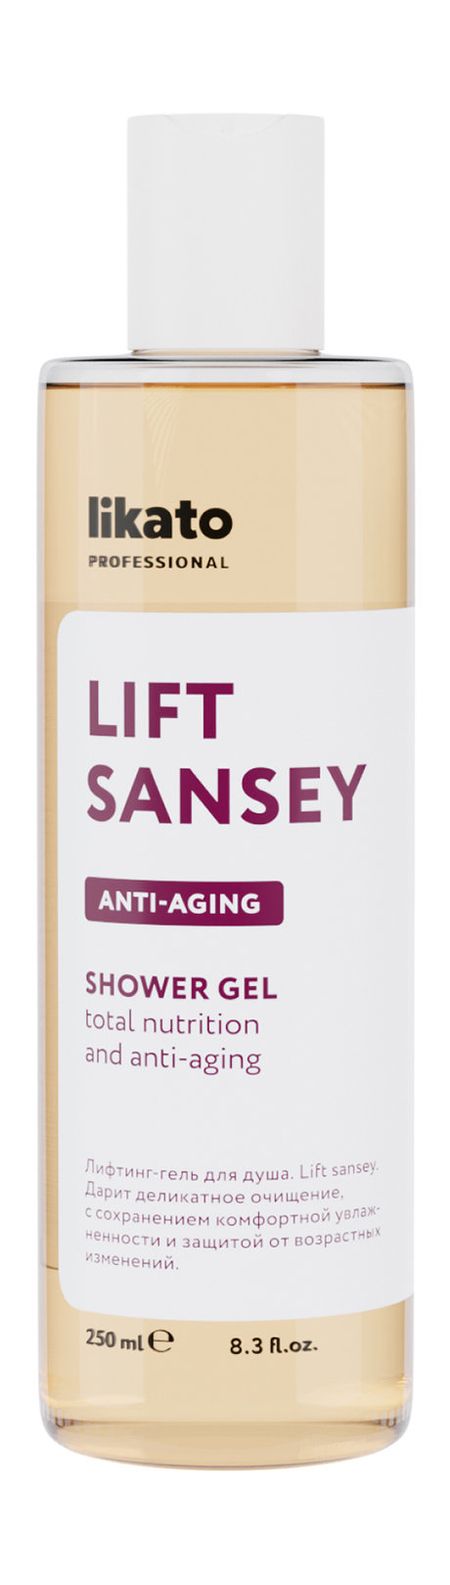 likato professional lift sansey anti-aging shower gel